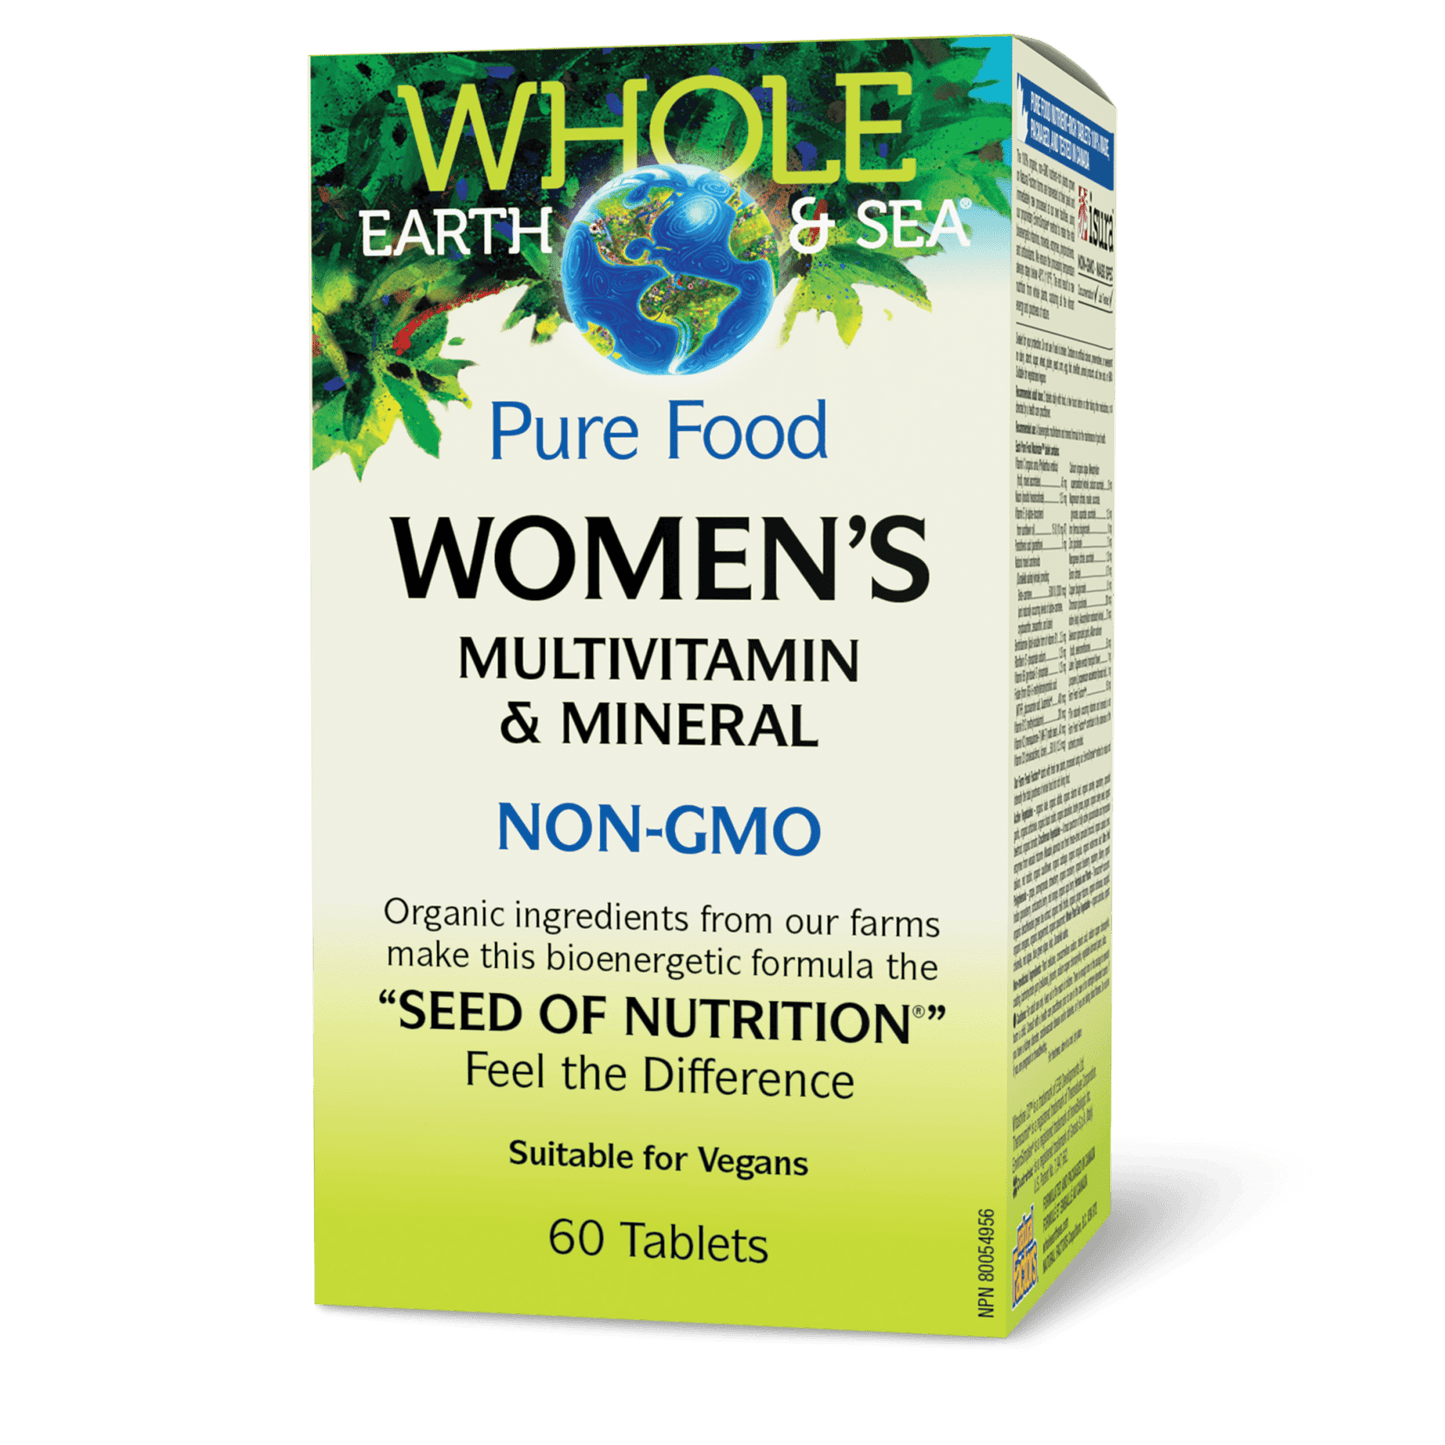 Women’s Multivitamin & Mineral, Whole Earth & Sea, Whole Earth & Sea®|v|image|35502